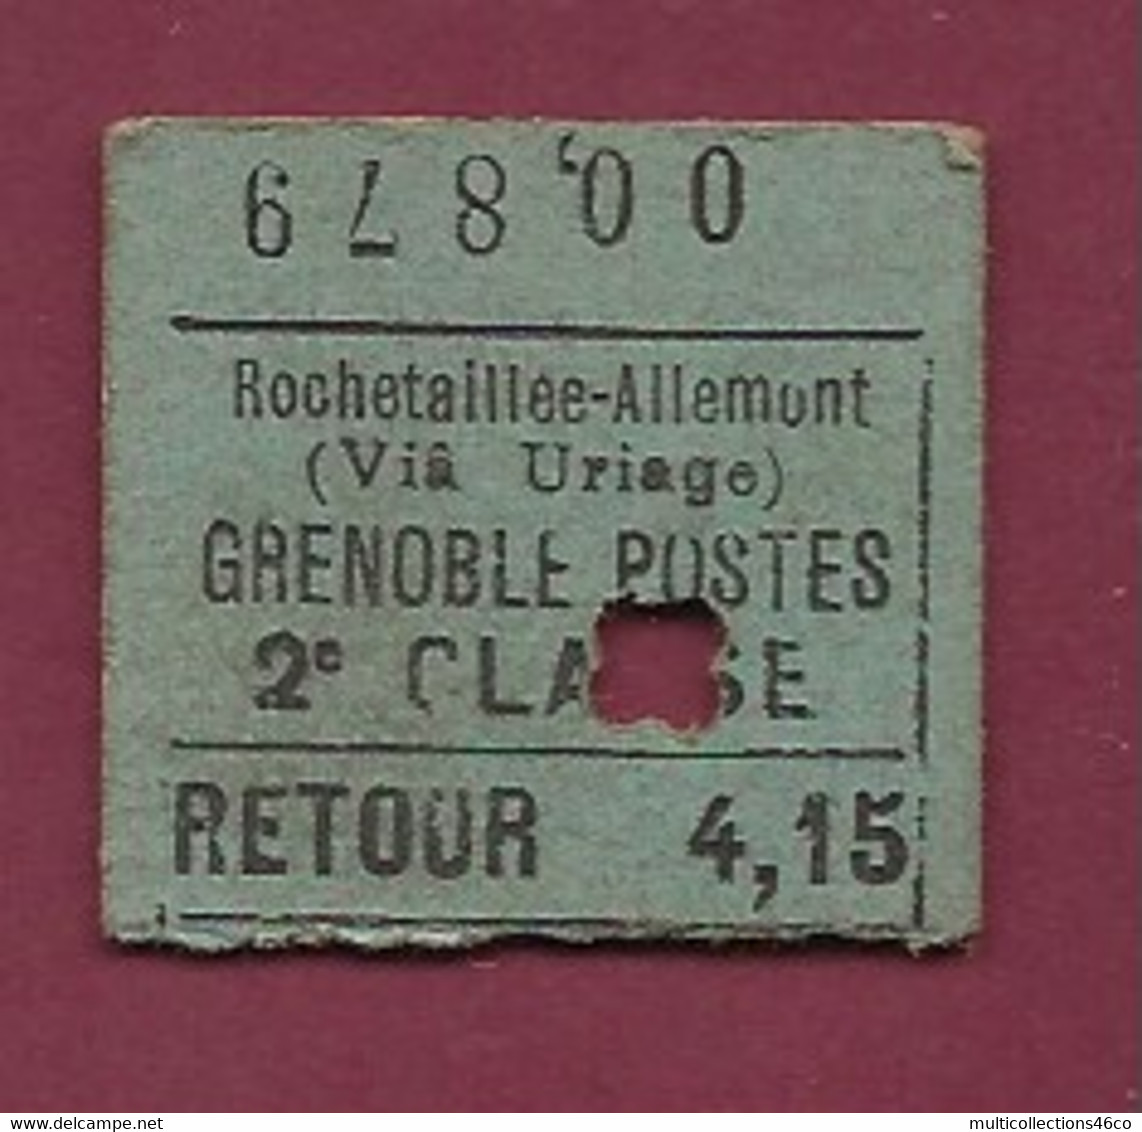 061220A - TICKET CHEMIN DE FER TRAMWAY - FRANCE Rochetaillee Allemont Via Uriage GRENOBLE POSTES Retour 4,15 00879 - Europa